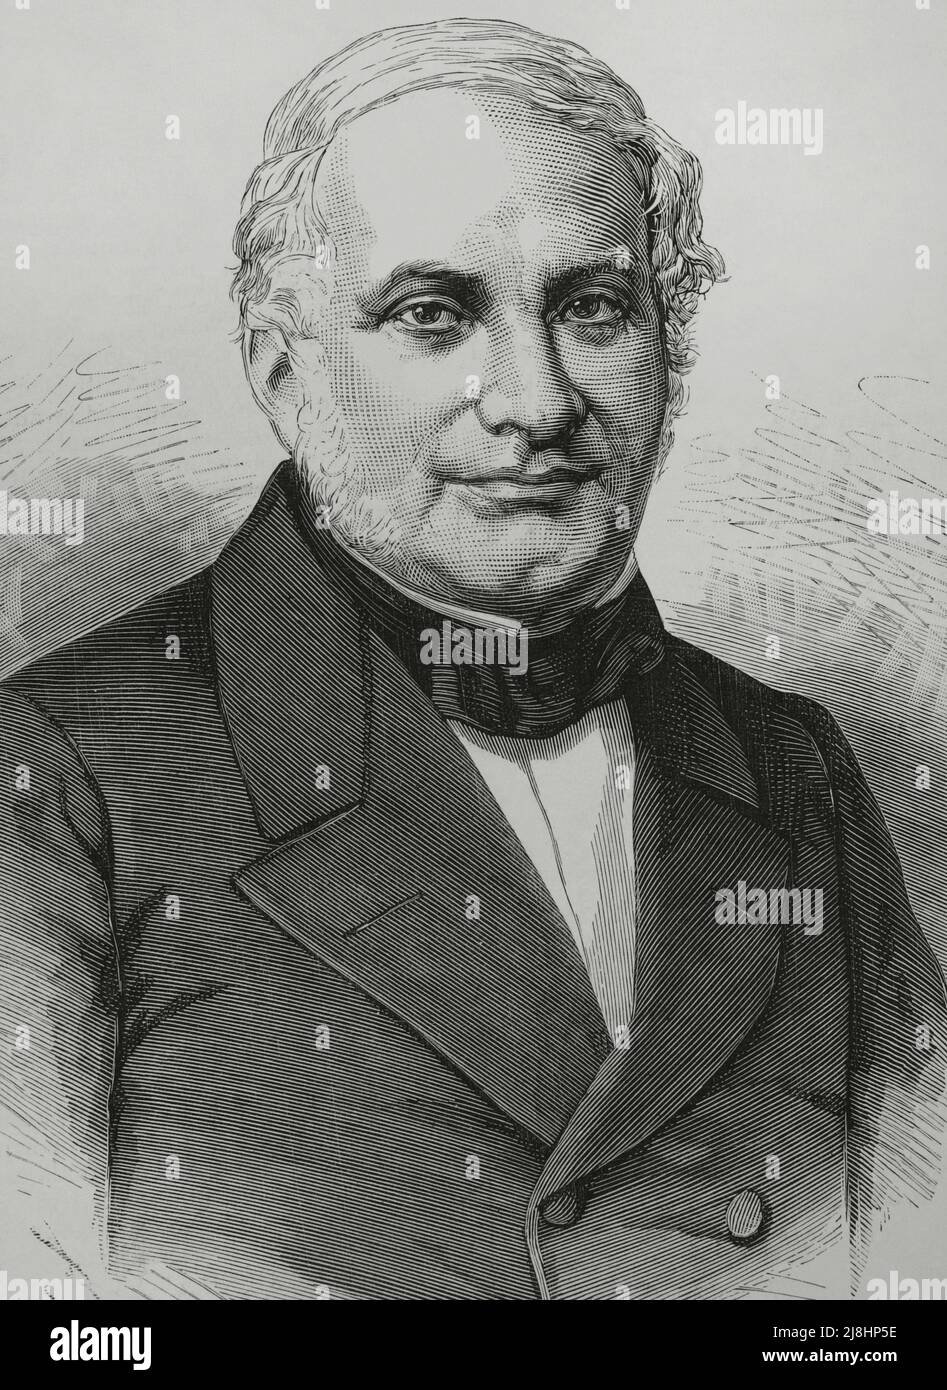 Alejandro Mon y Menéndez (1801-1882). Spanish politician and jurist. Prime minister of Spain in 1864. Portrait. Engraving, 1882. Stock Photo